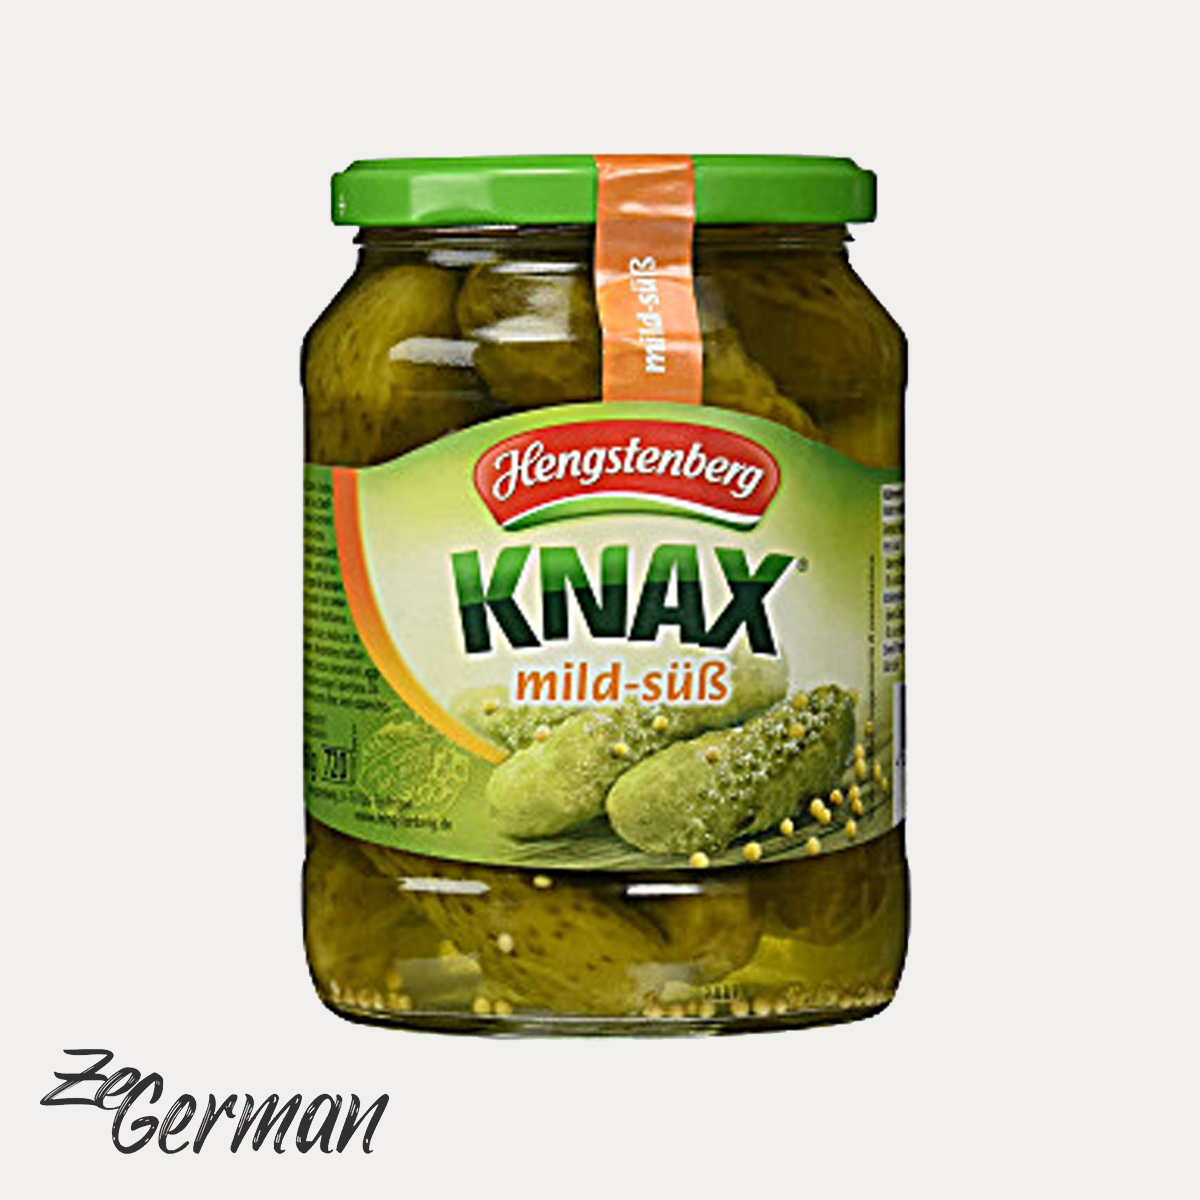 Knax gherkins, mild-sweet, 720 ml